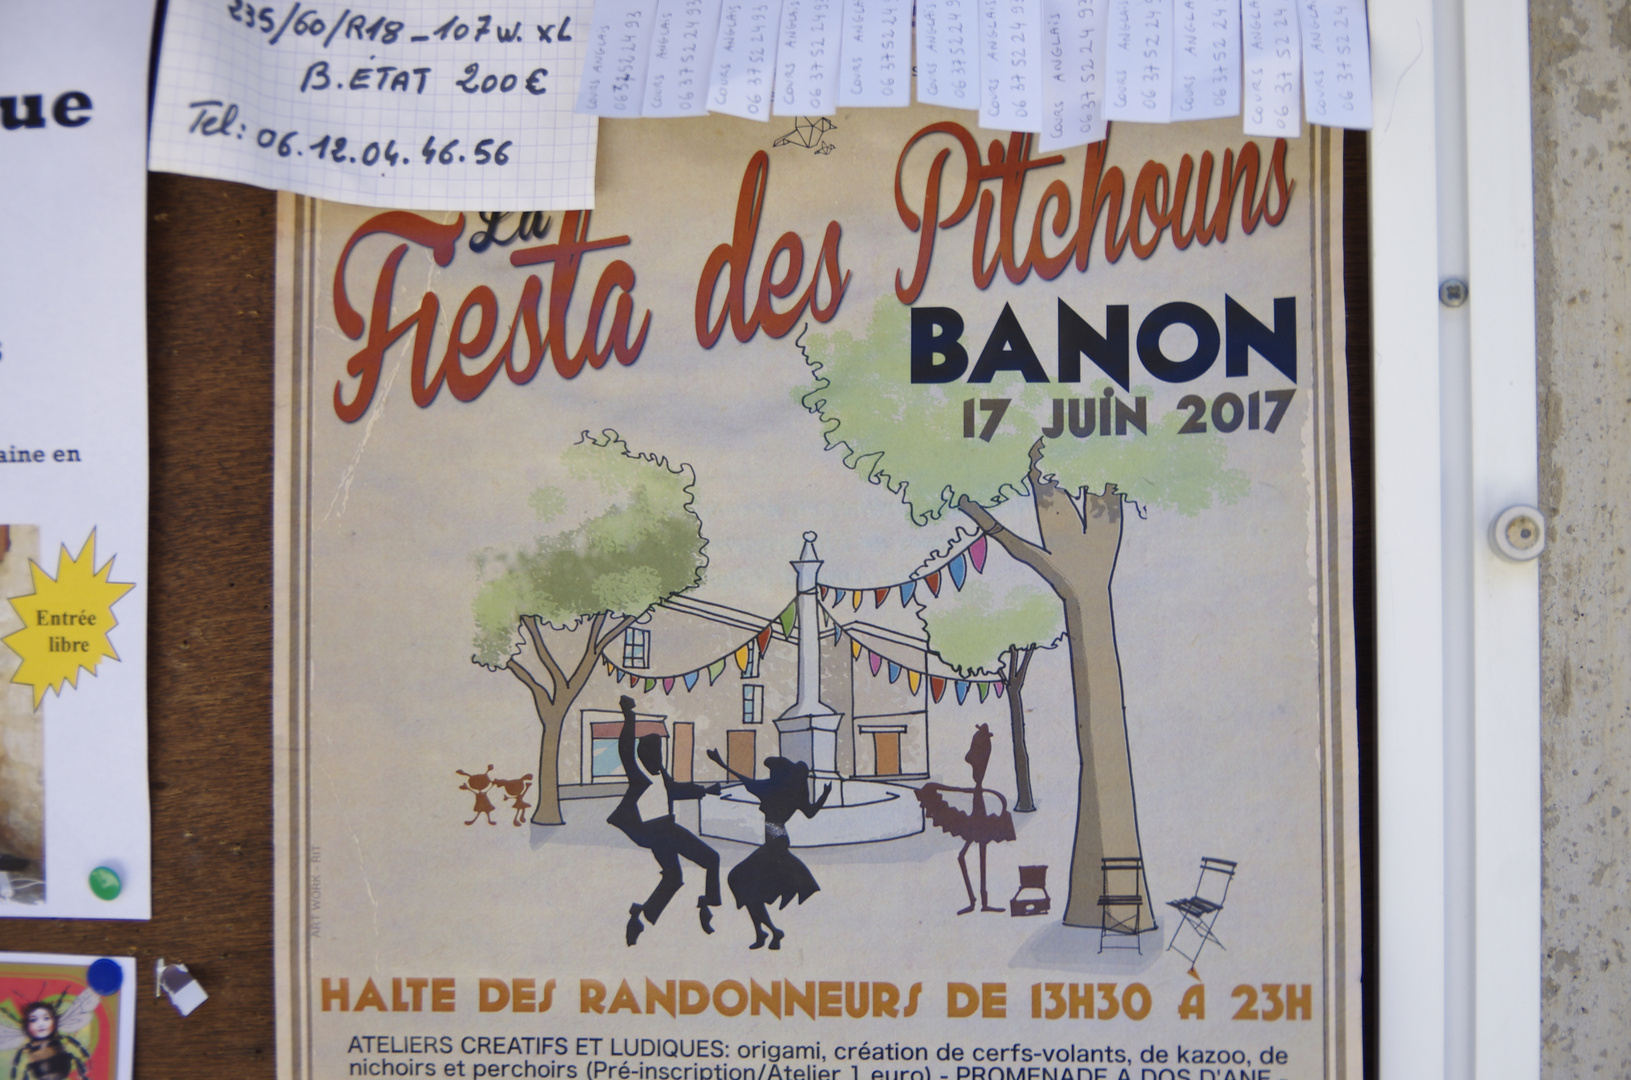 Banon: Fiesta des Pitchouns 17.Juni